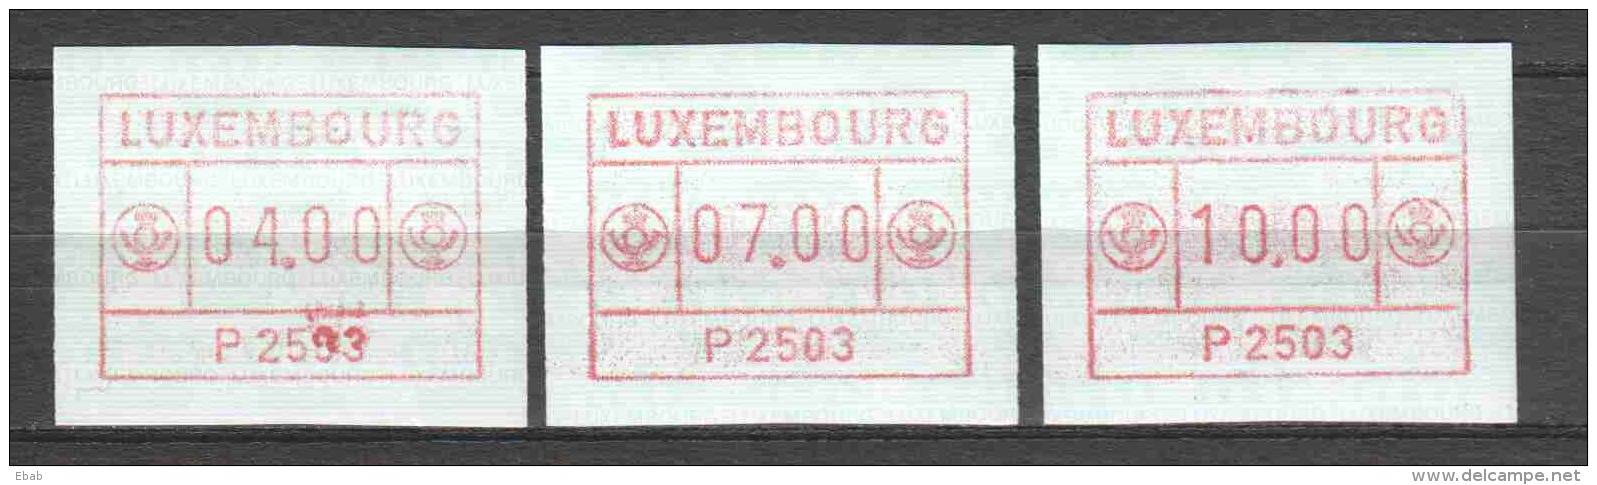 Luxemburg 1983 Automatmarken (2) - Viñetas De Franqueo